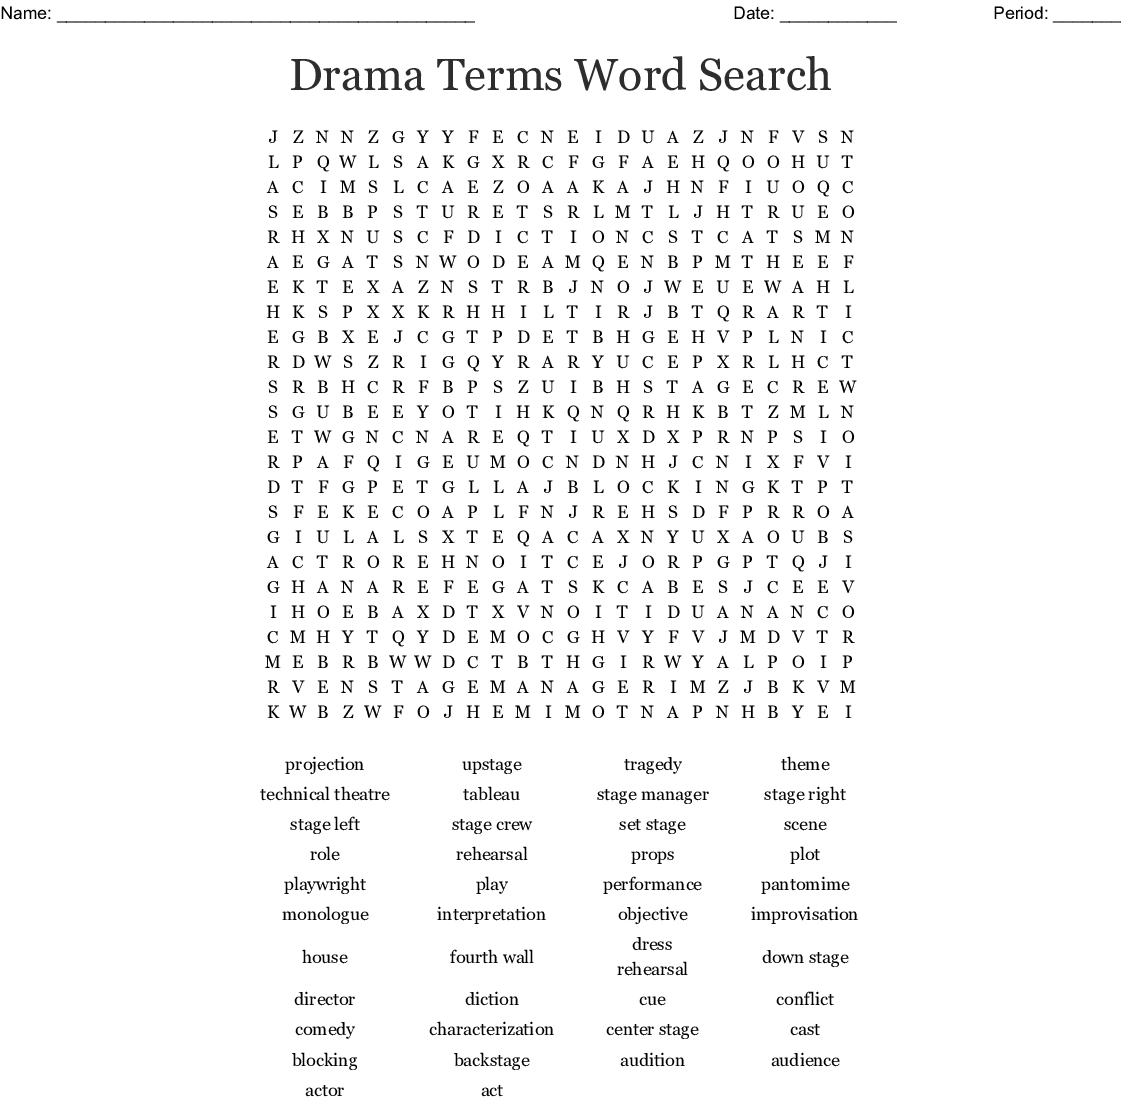 Drama Elements Word Search - Wordmint